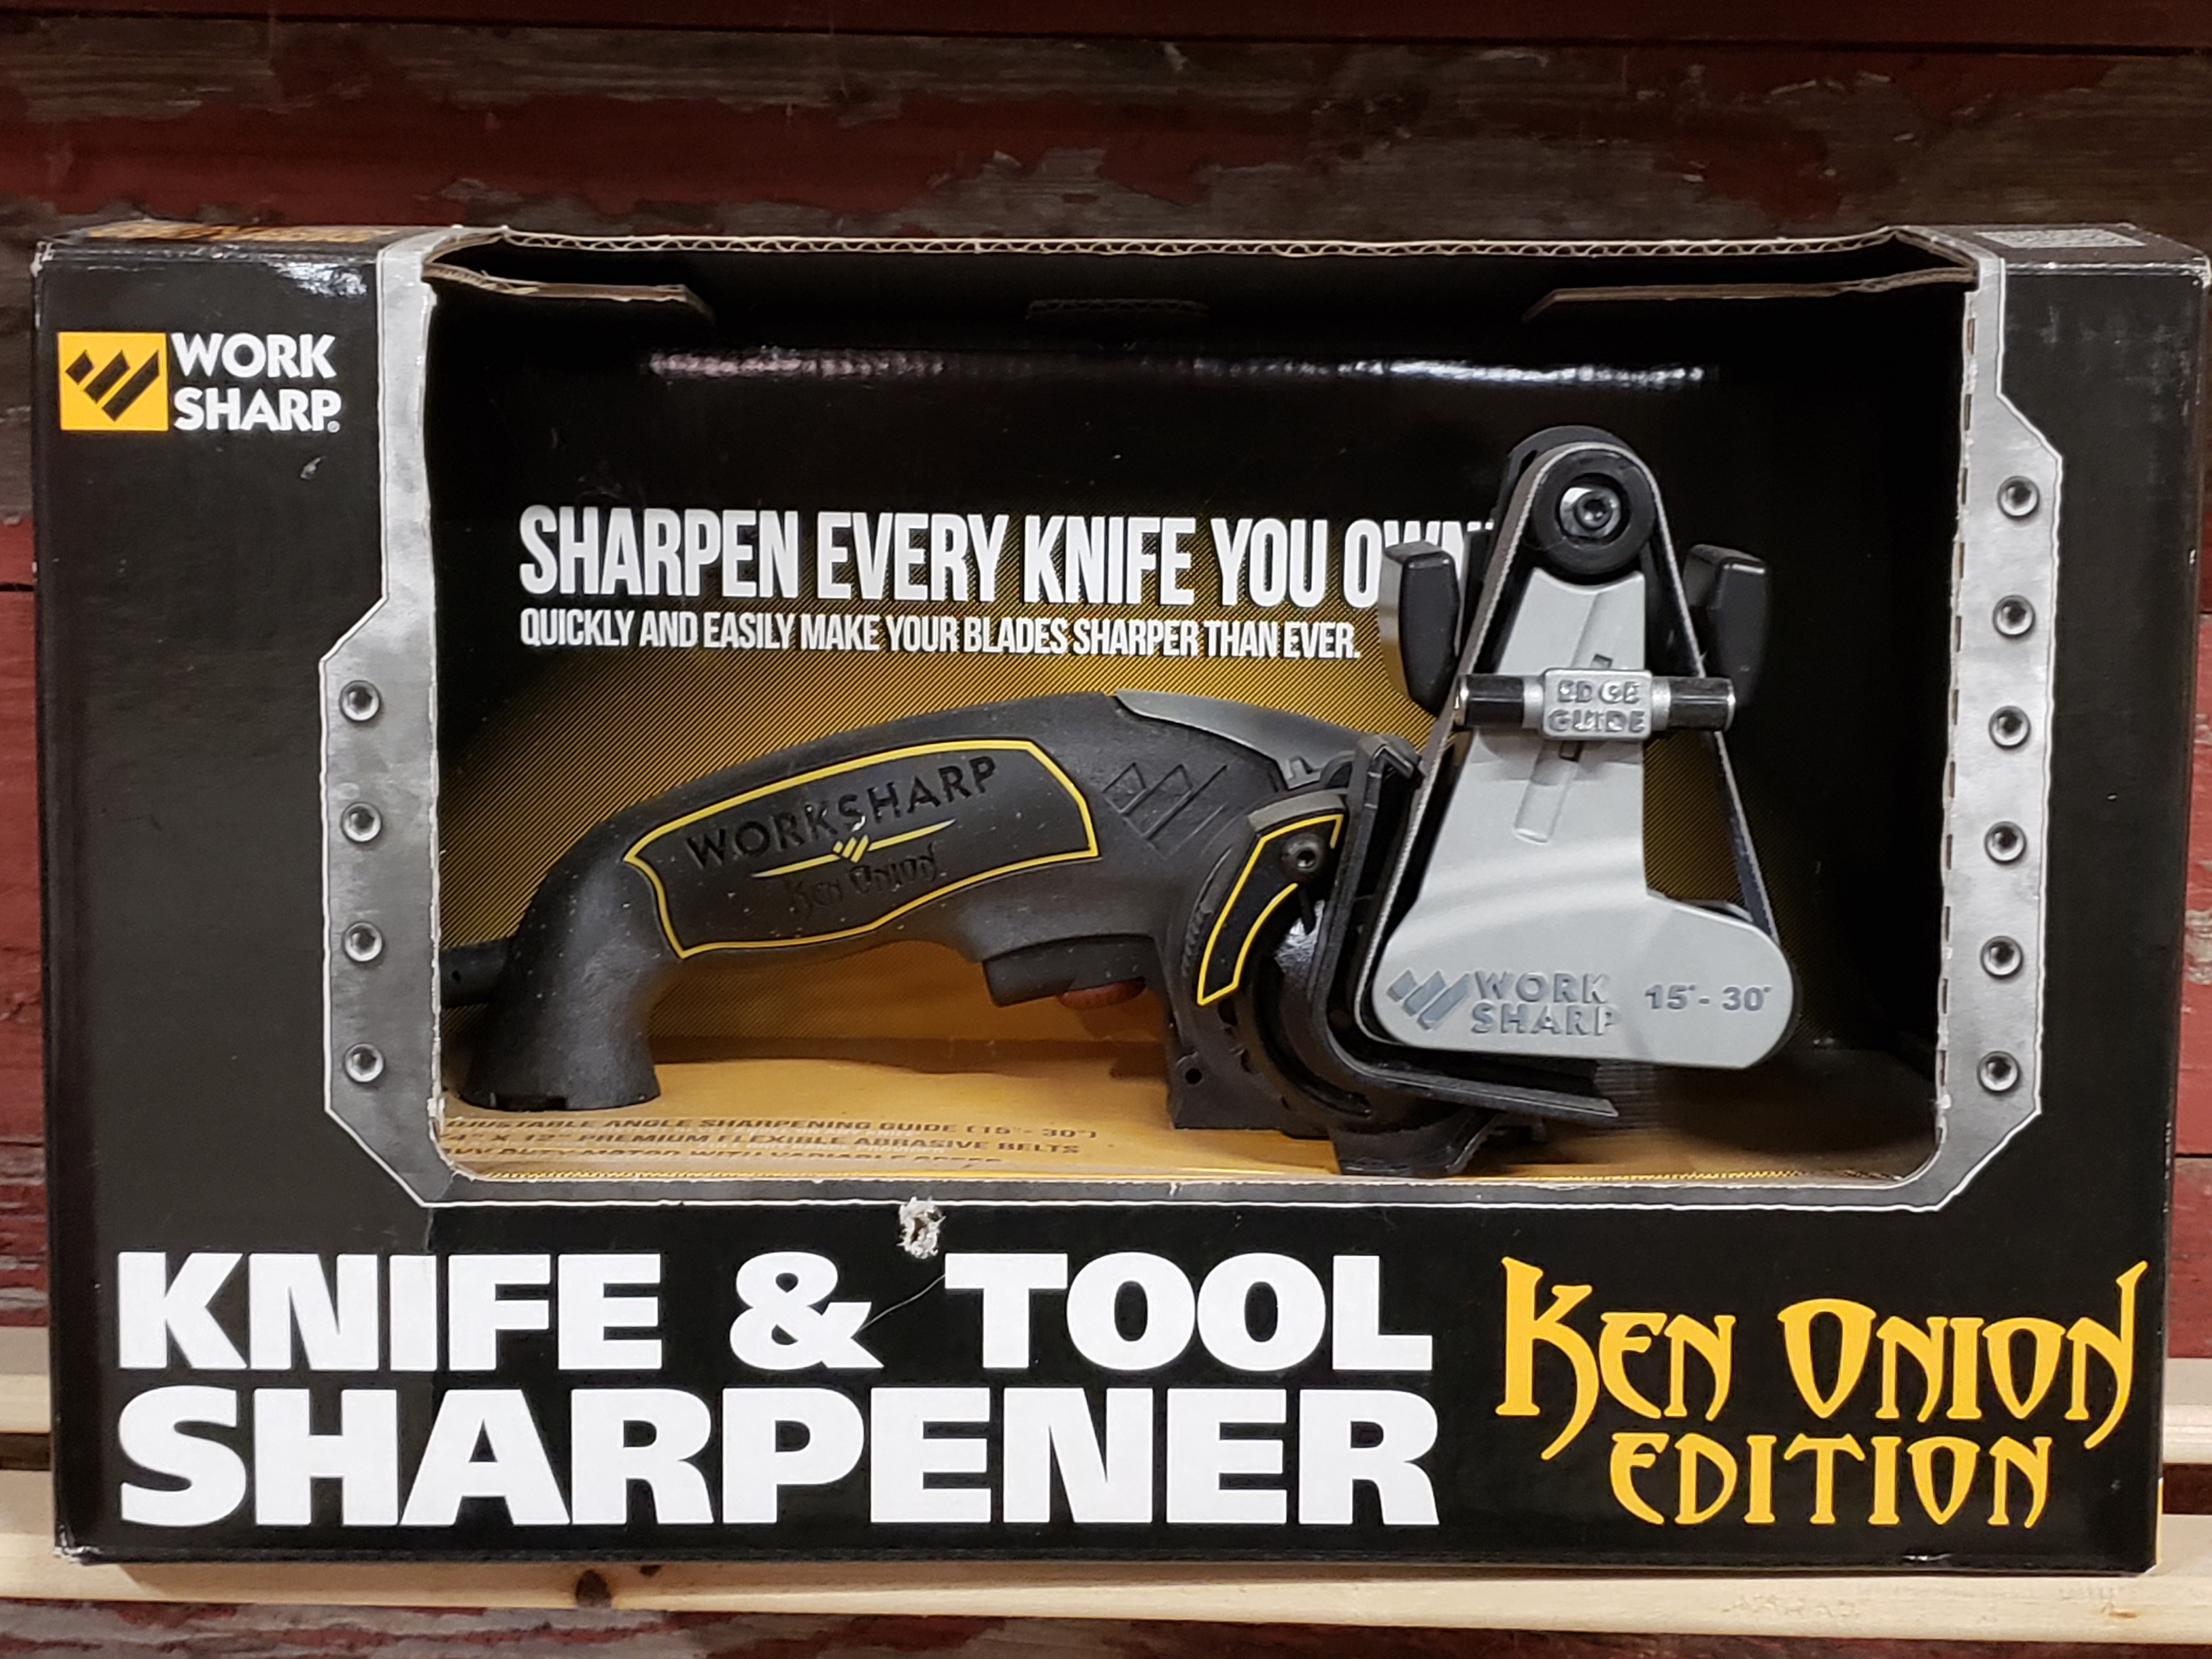 New Adjustable Work Sharp Ken Onion Edition Knife and Tool